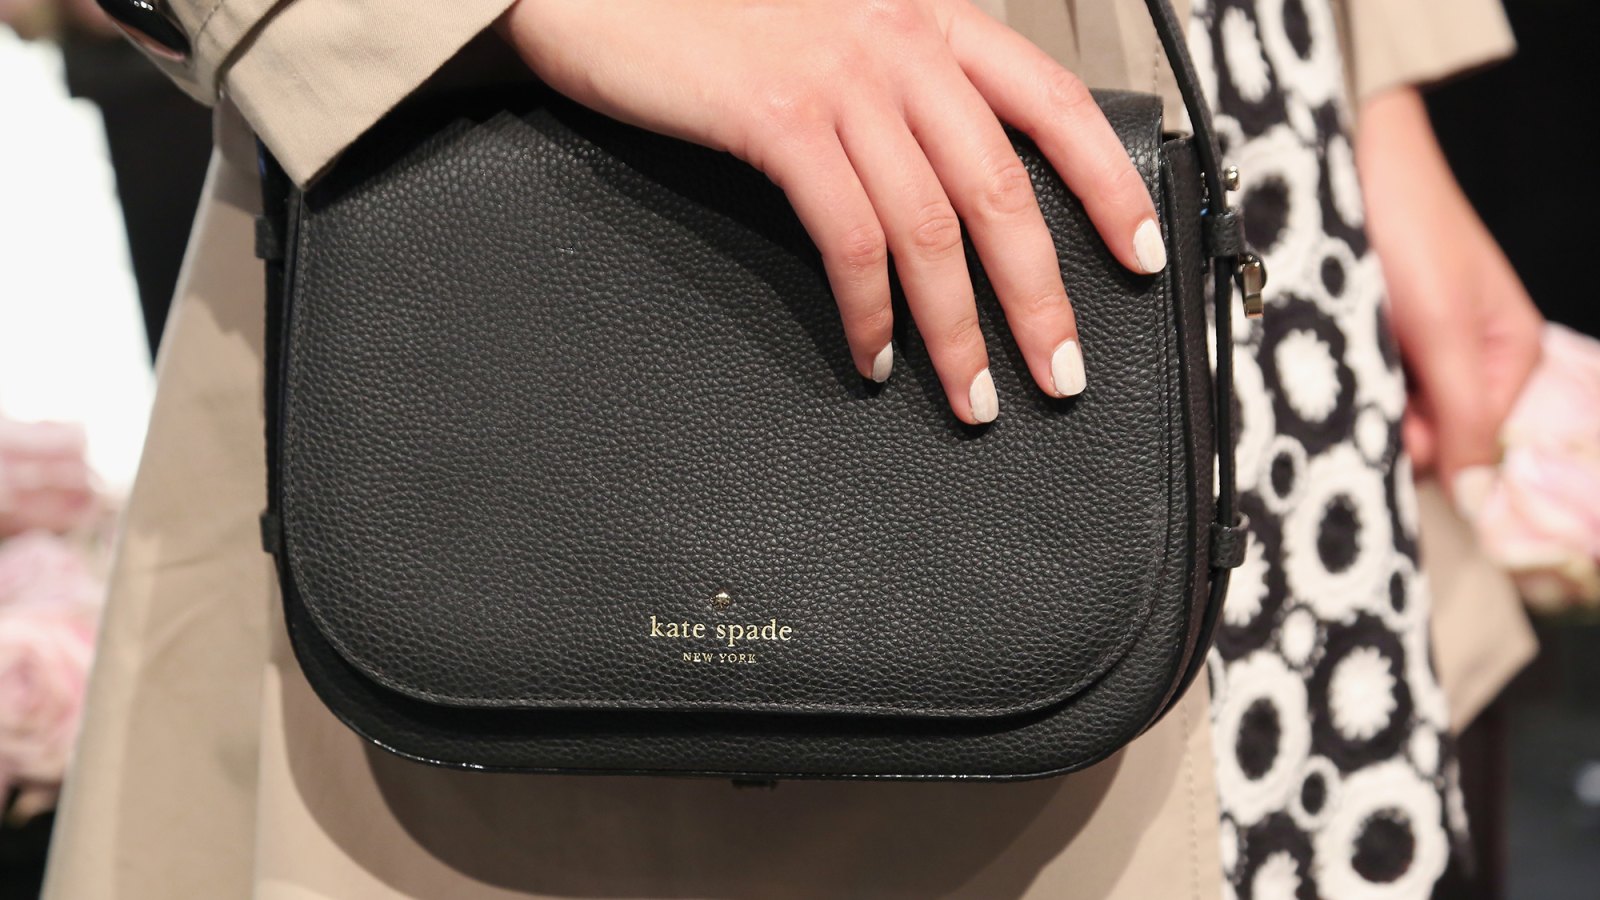 Our Favorite Kate Spade Bag in Under-$300 at Nordstrom!